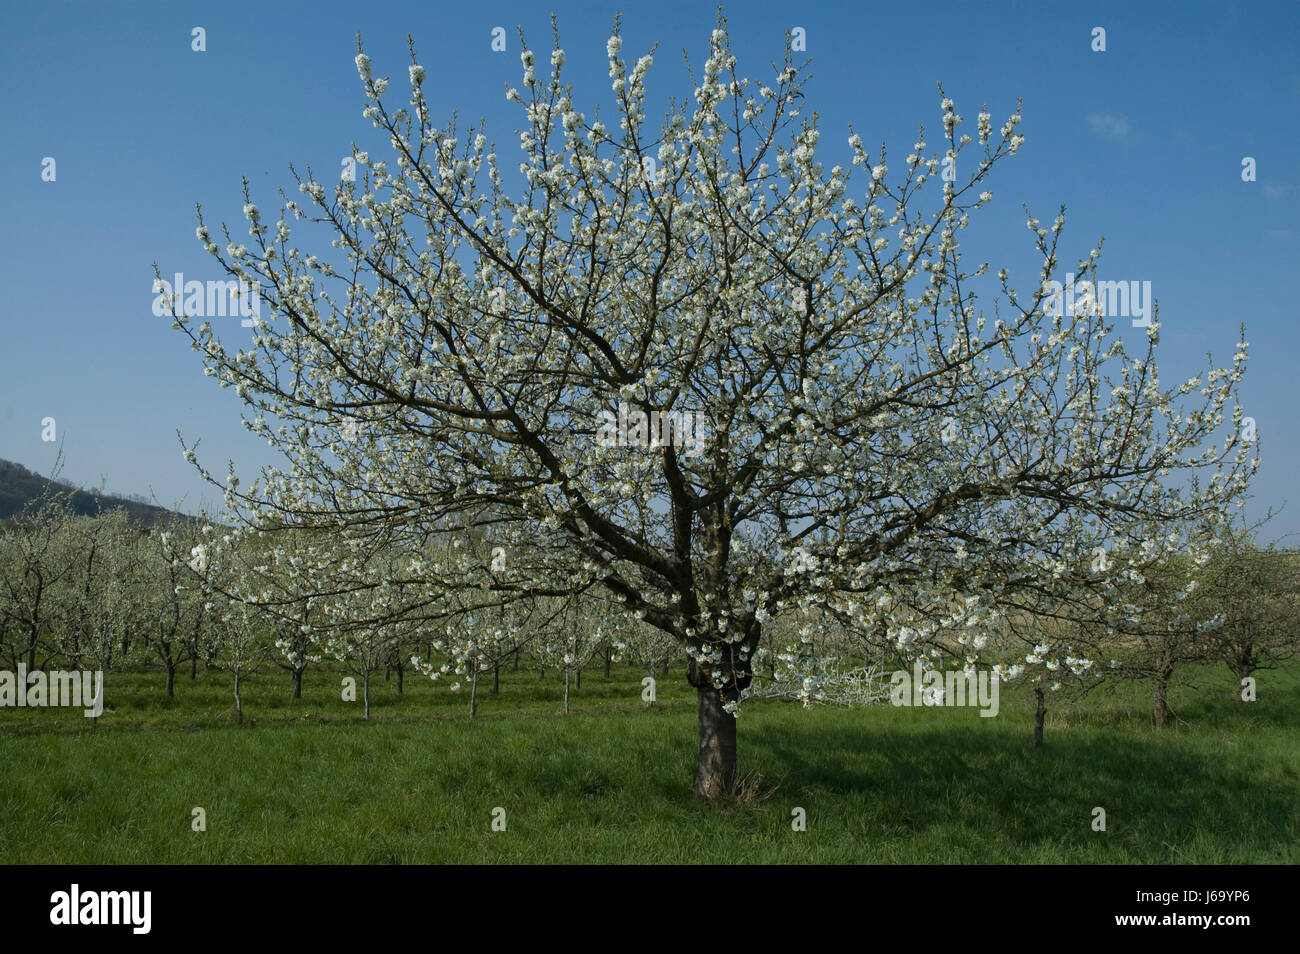 bloom blossom flourish flourishing agriculture farming fruit-tree cherry tree Stock Photo